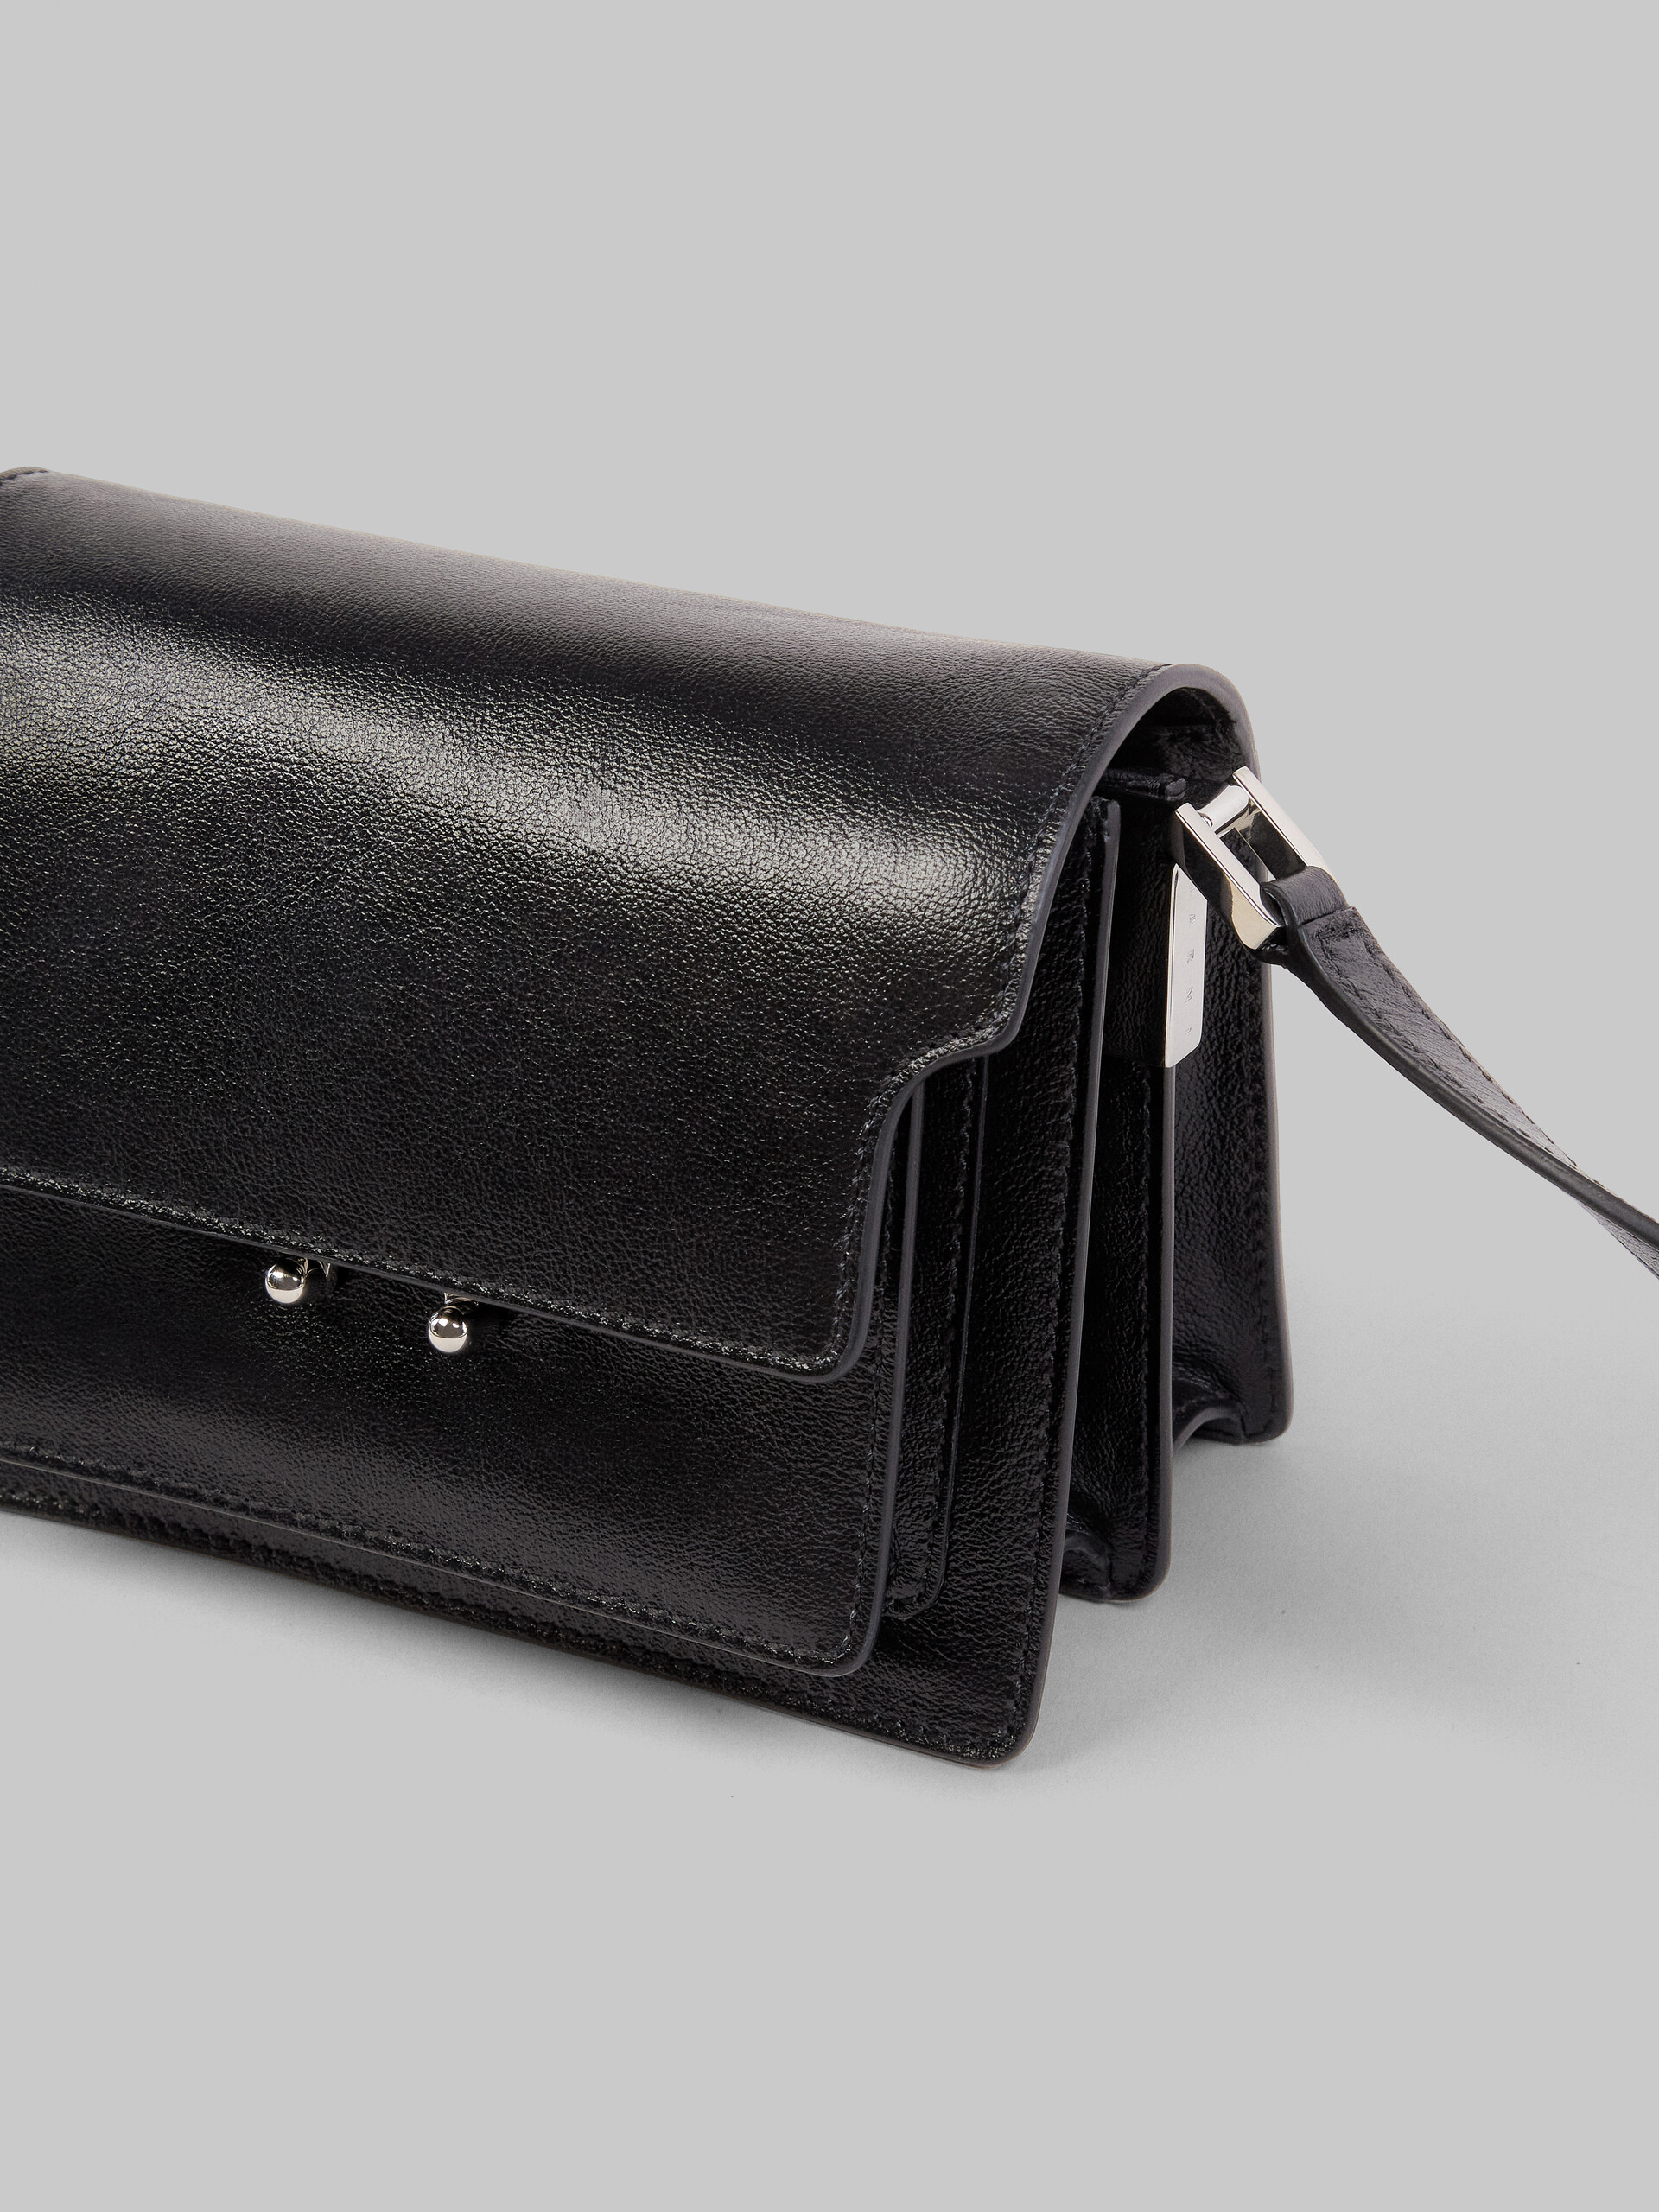 TRUNK SOFT mini bag in black leather